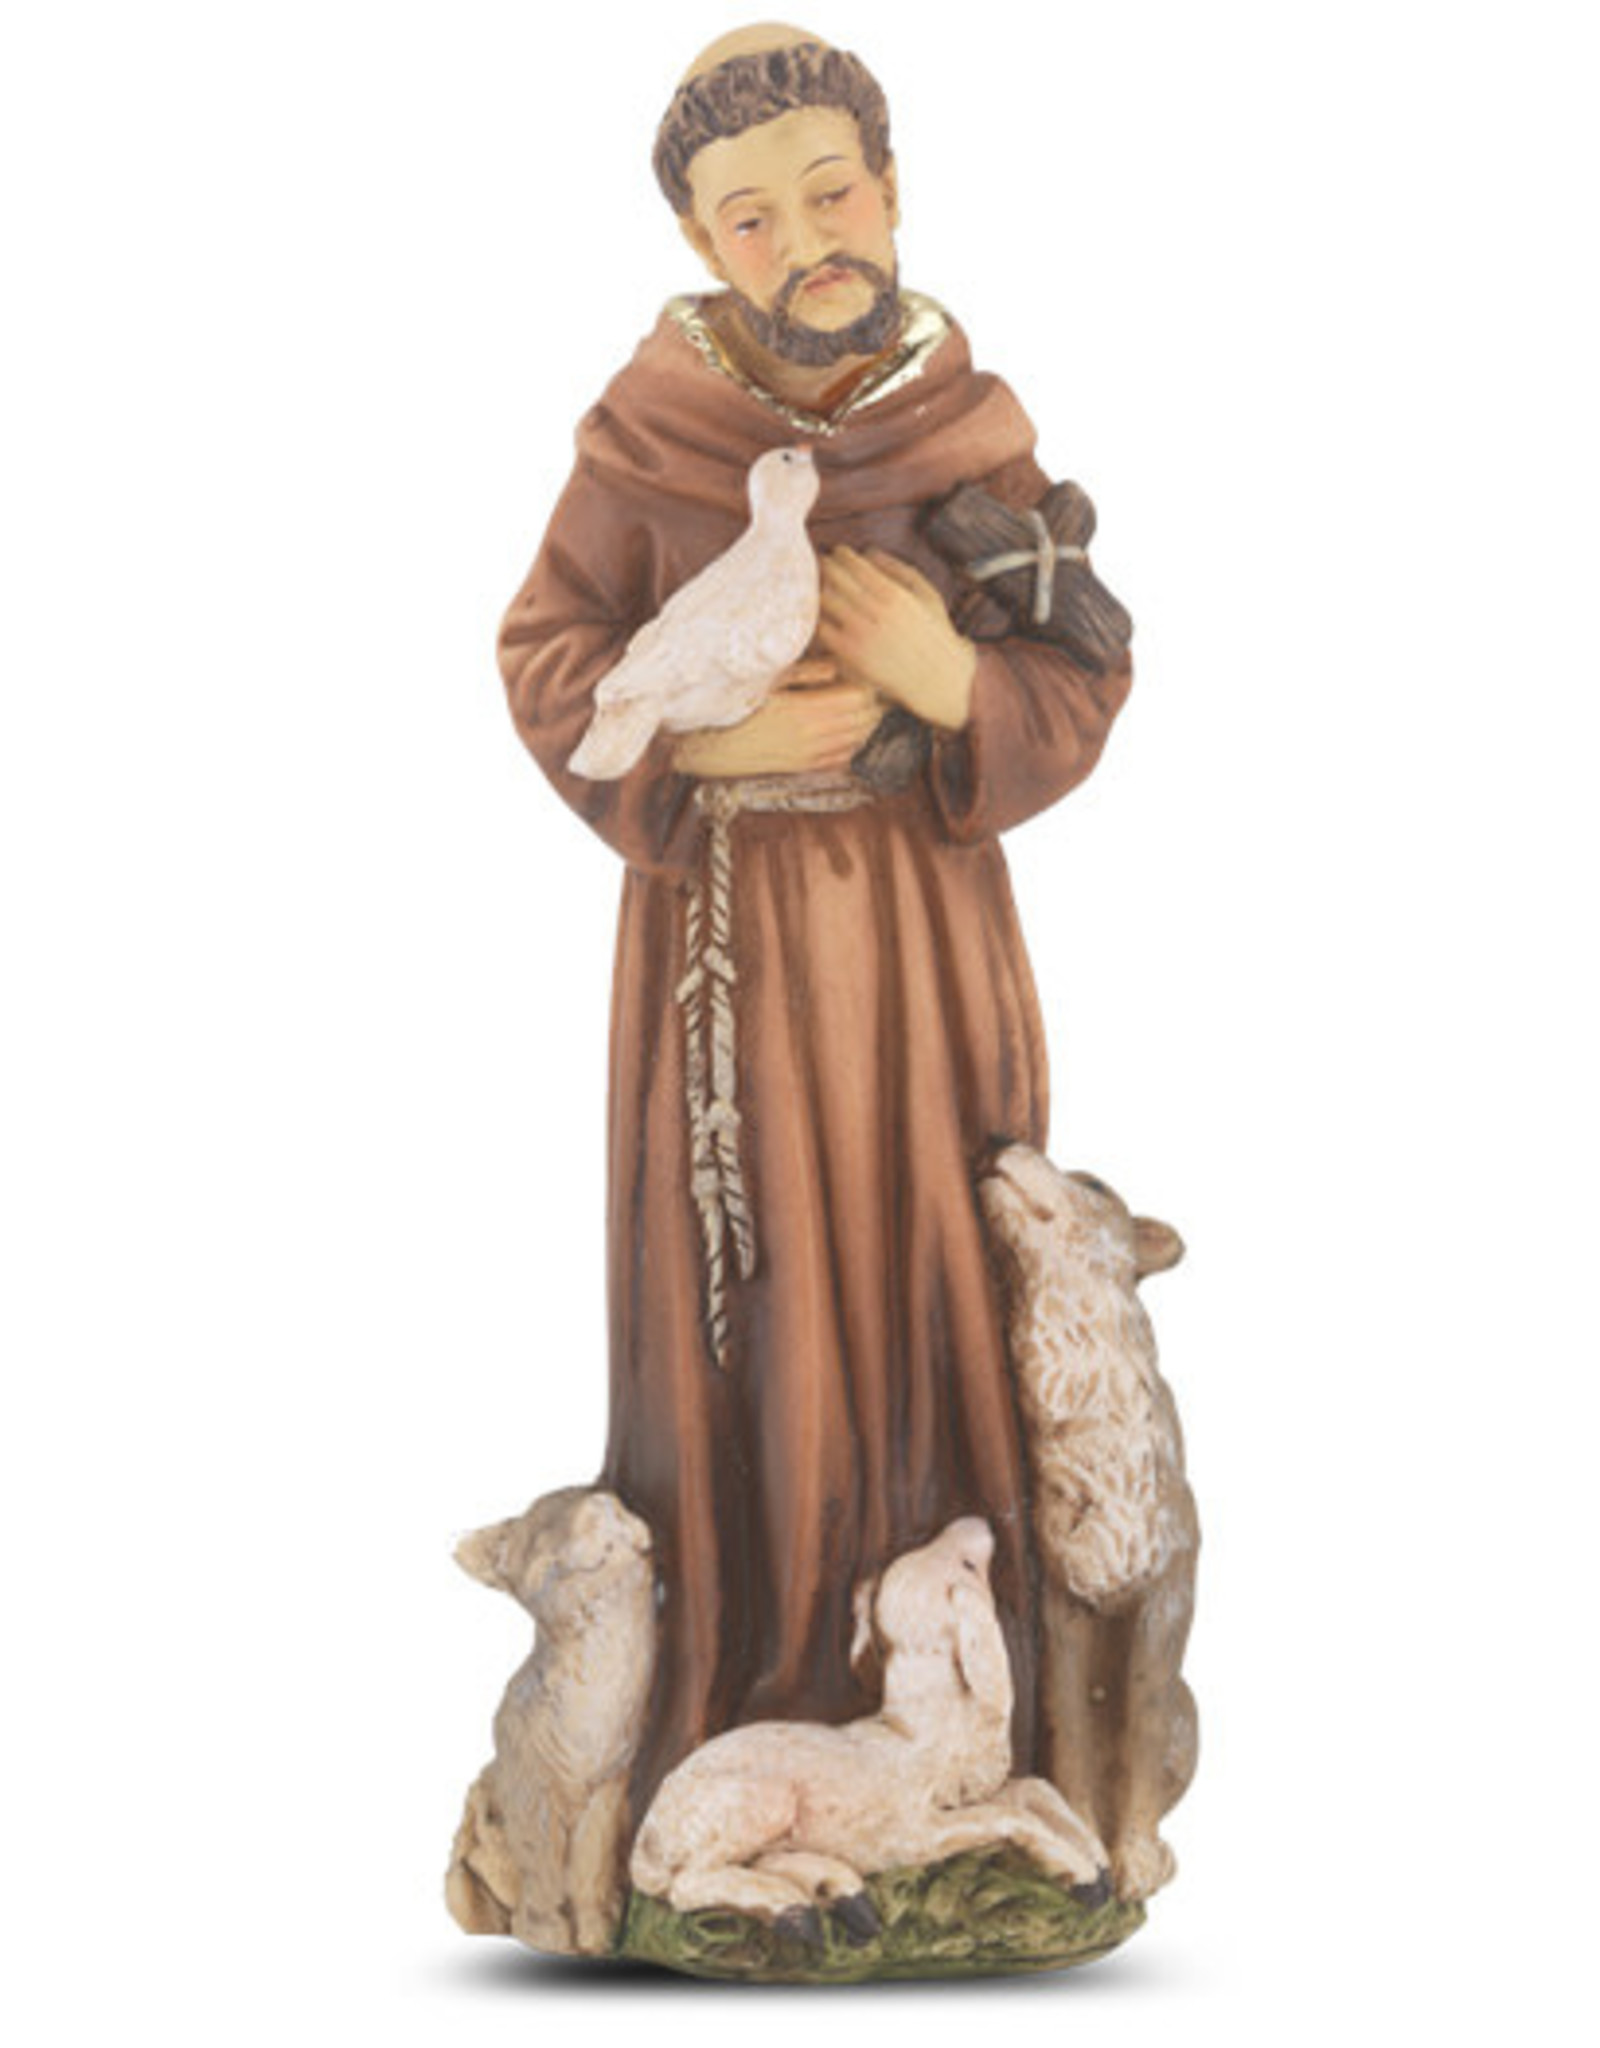 Hirten Patron Saint Statue - St. Francis of Assisi